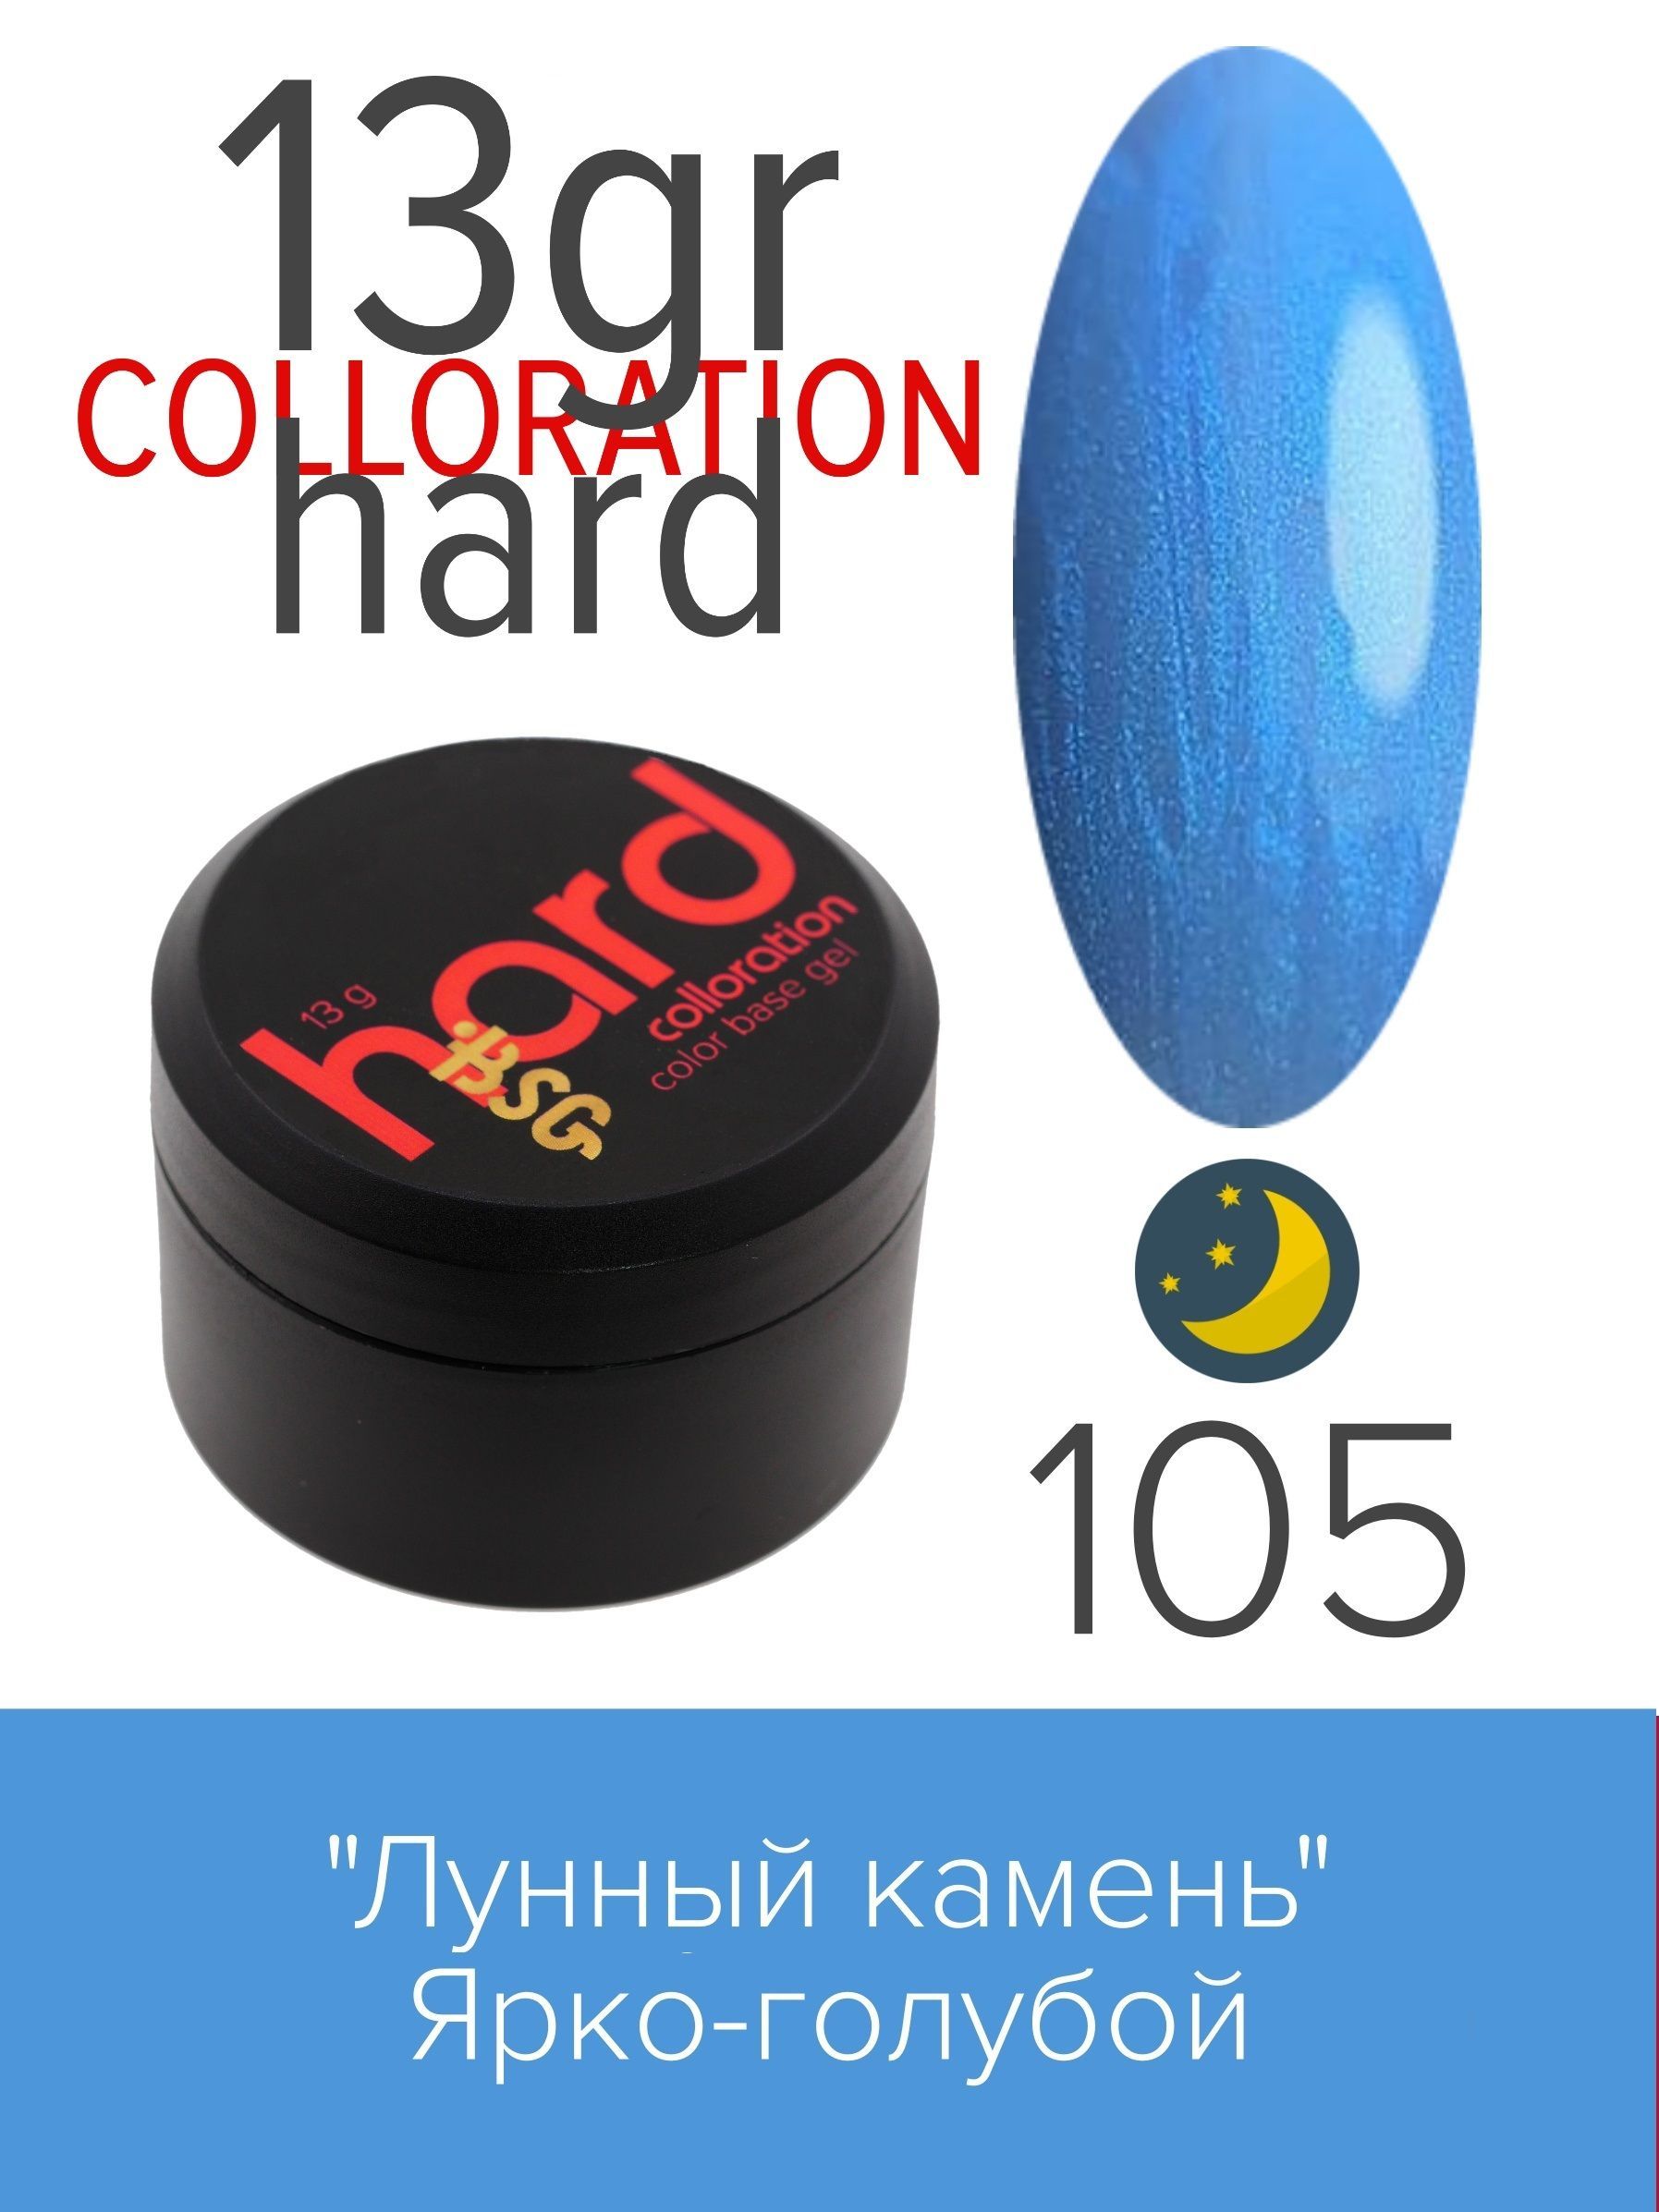 База BSG Colloration Hard цветная жесткая №105